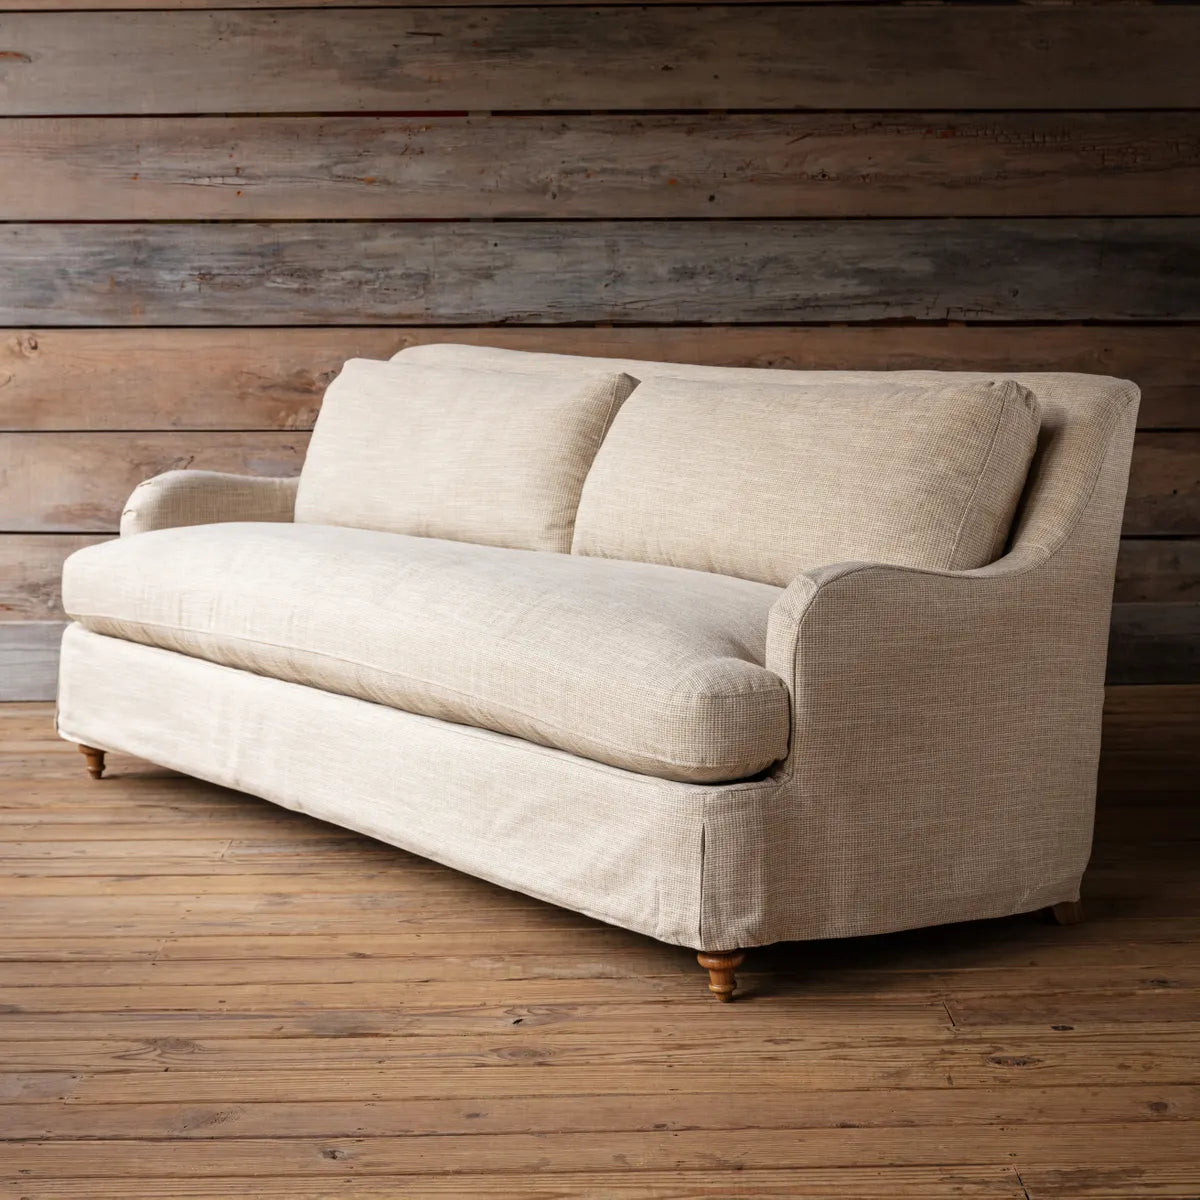 Houndstooth Printed Sofa for sale, Restoration Hardware sofas for sale